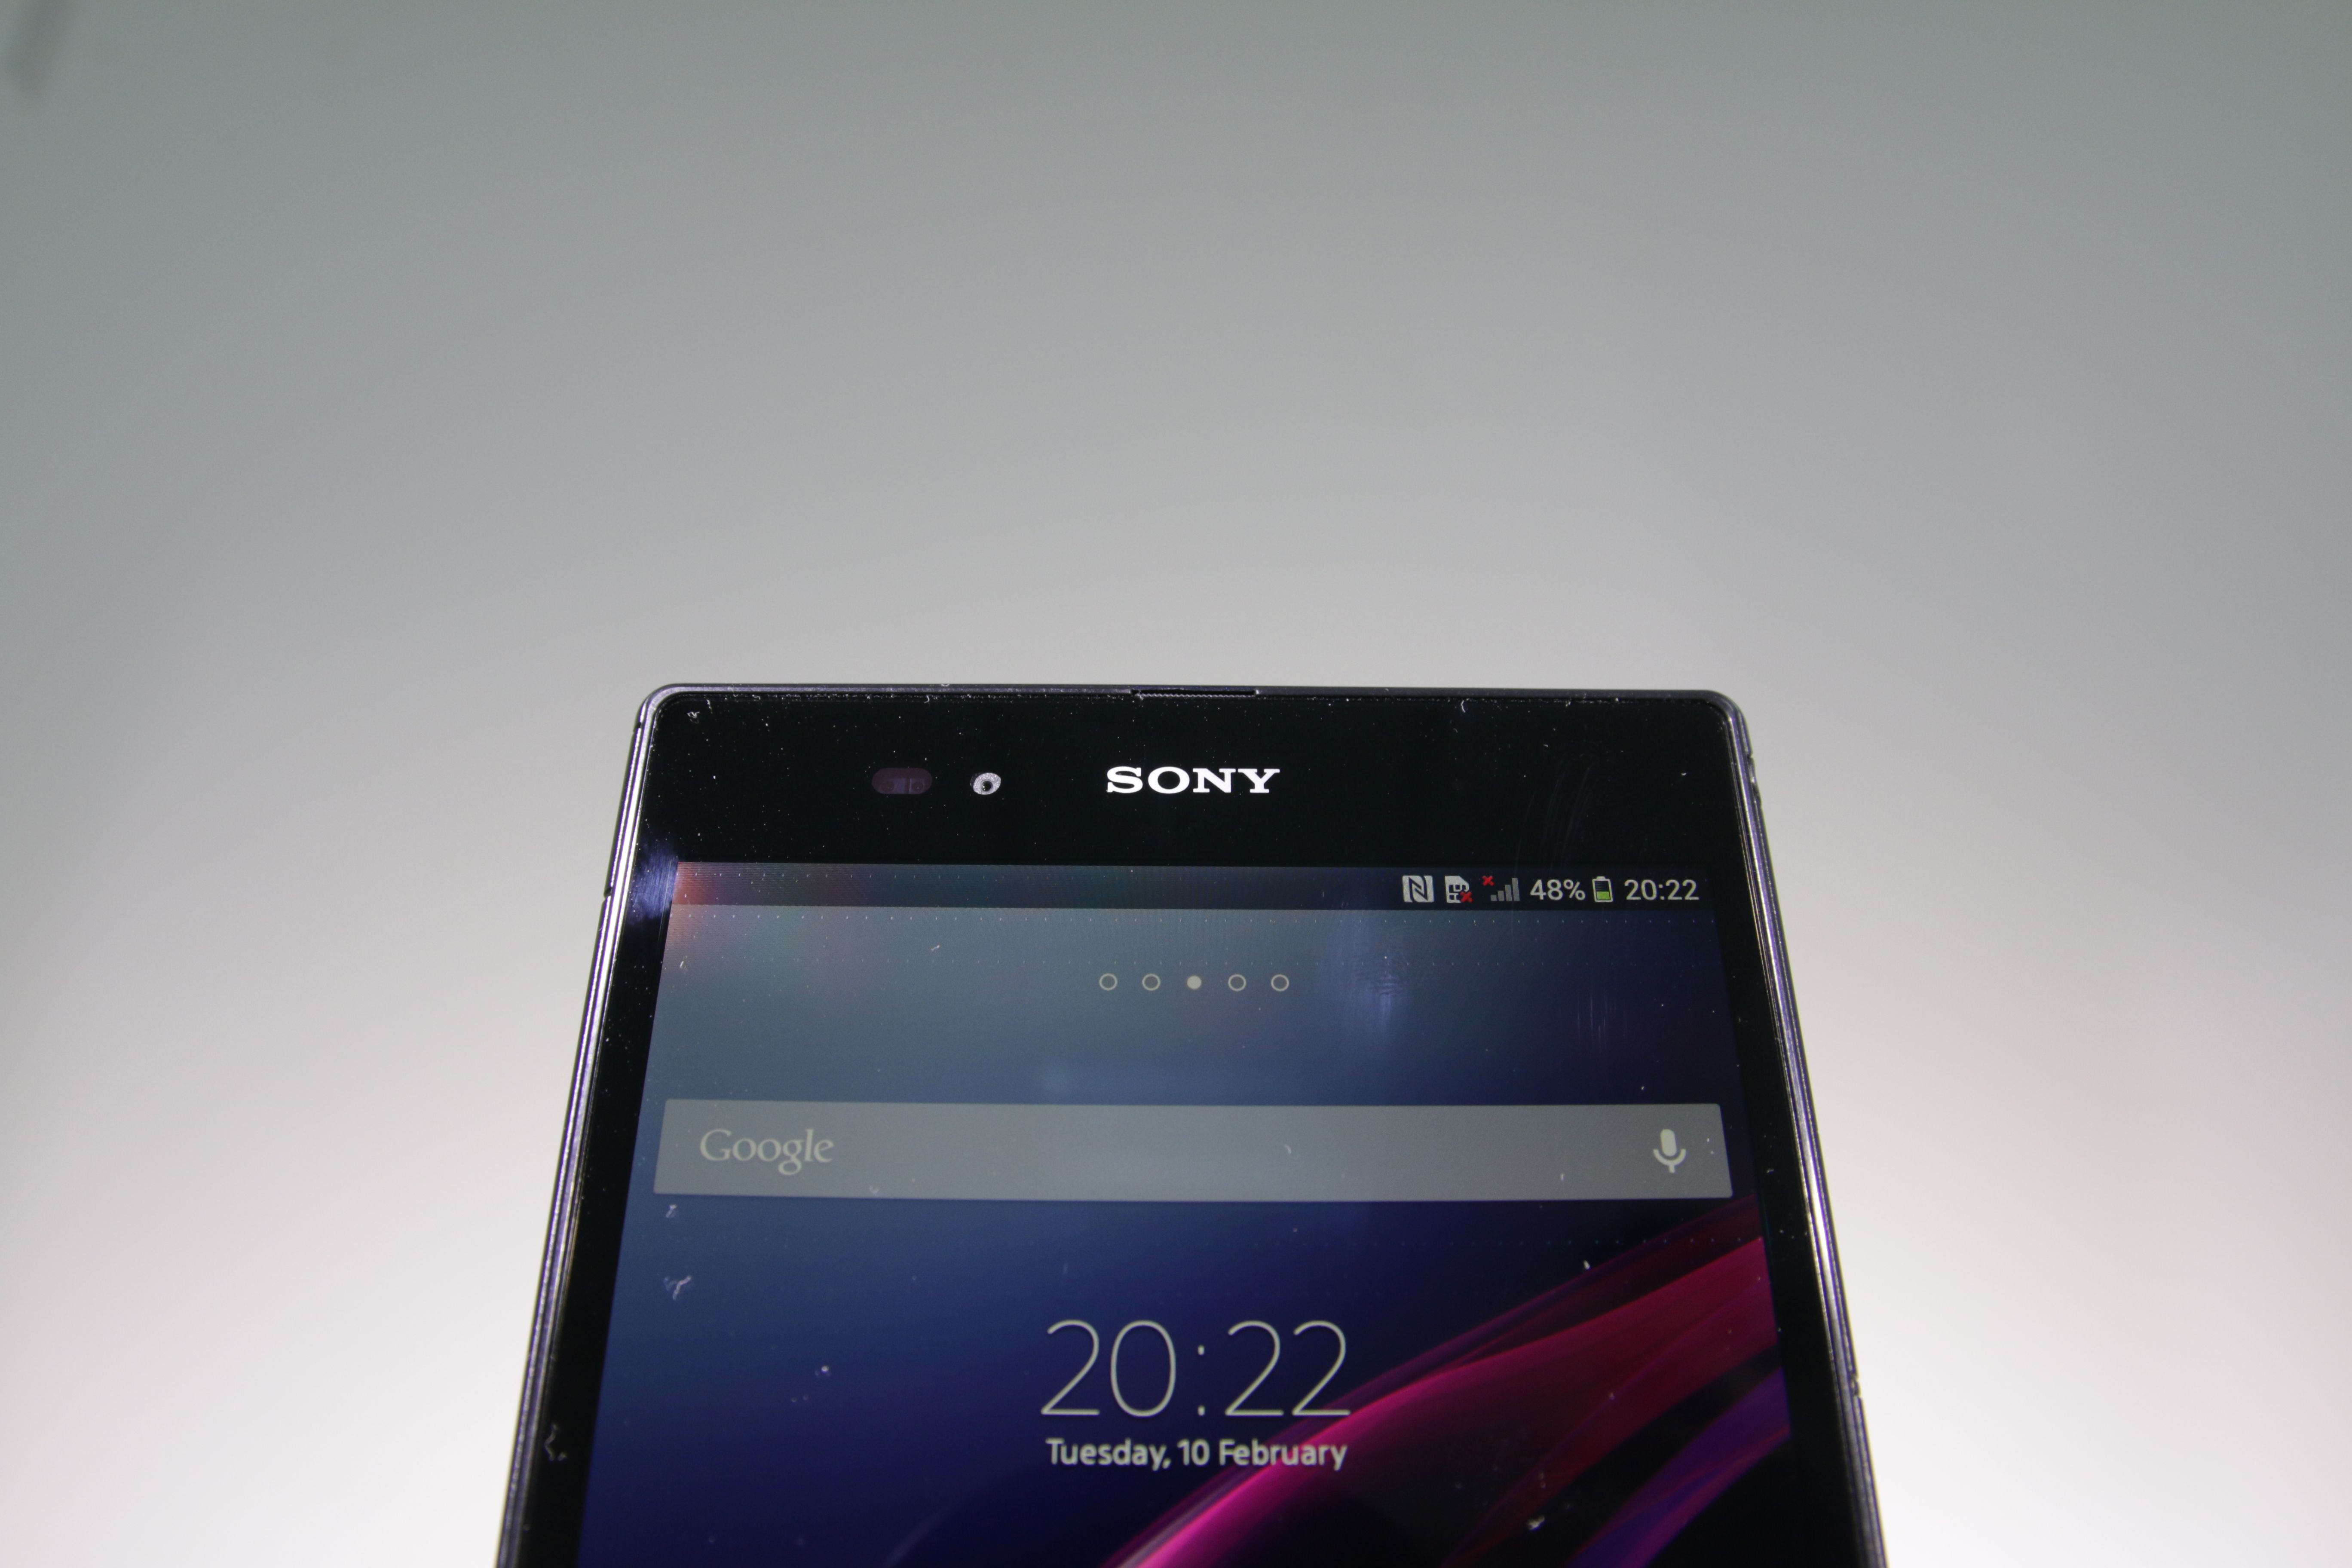 Smartphone Sony Xperia Z Ultra Preto, Quad-core 2.2ghz, Display